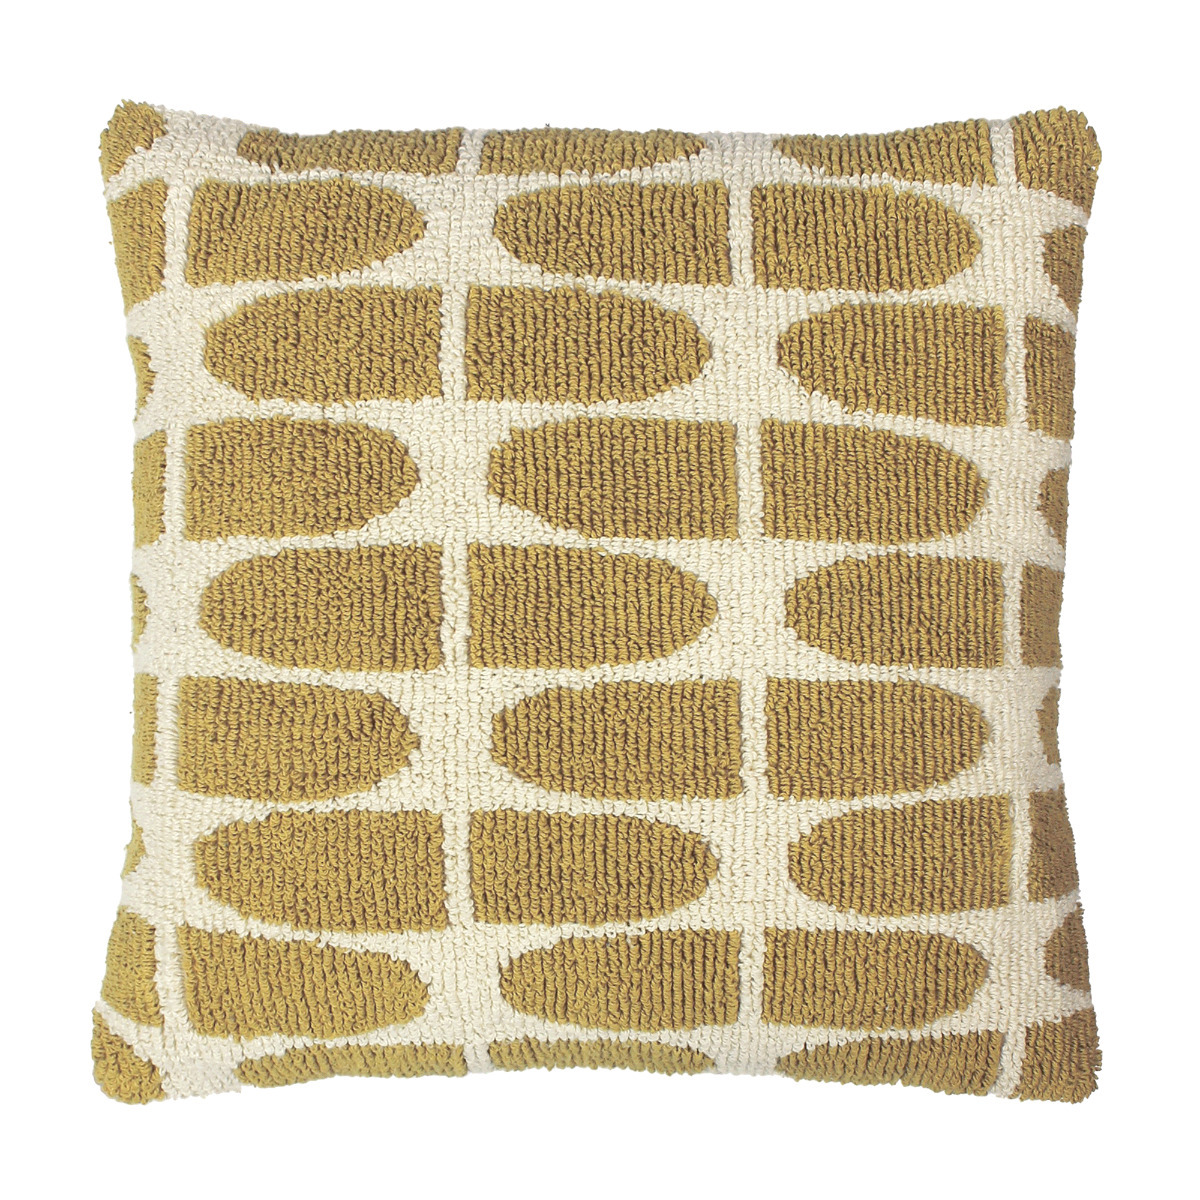 Taiza Ochre Cushion, Square, Yellow Fabric - Barker & Stonehouse - image 1